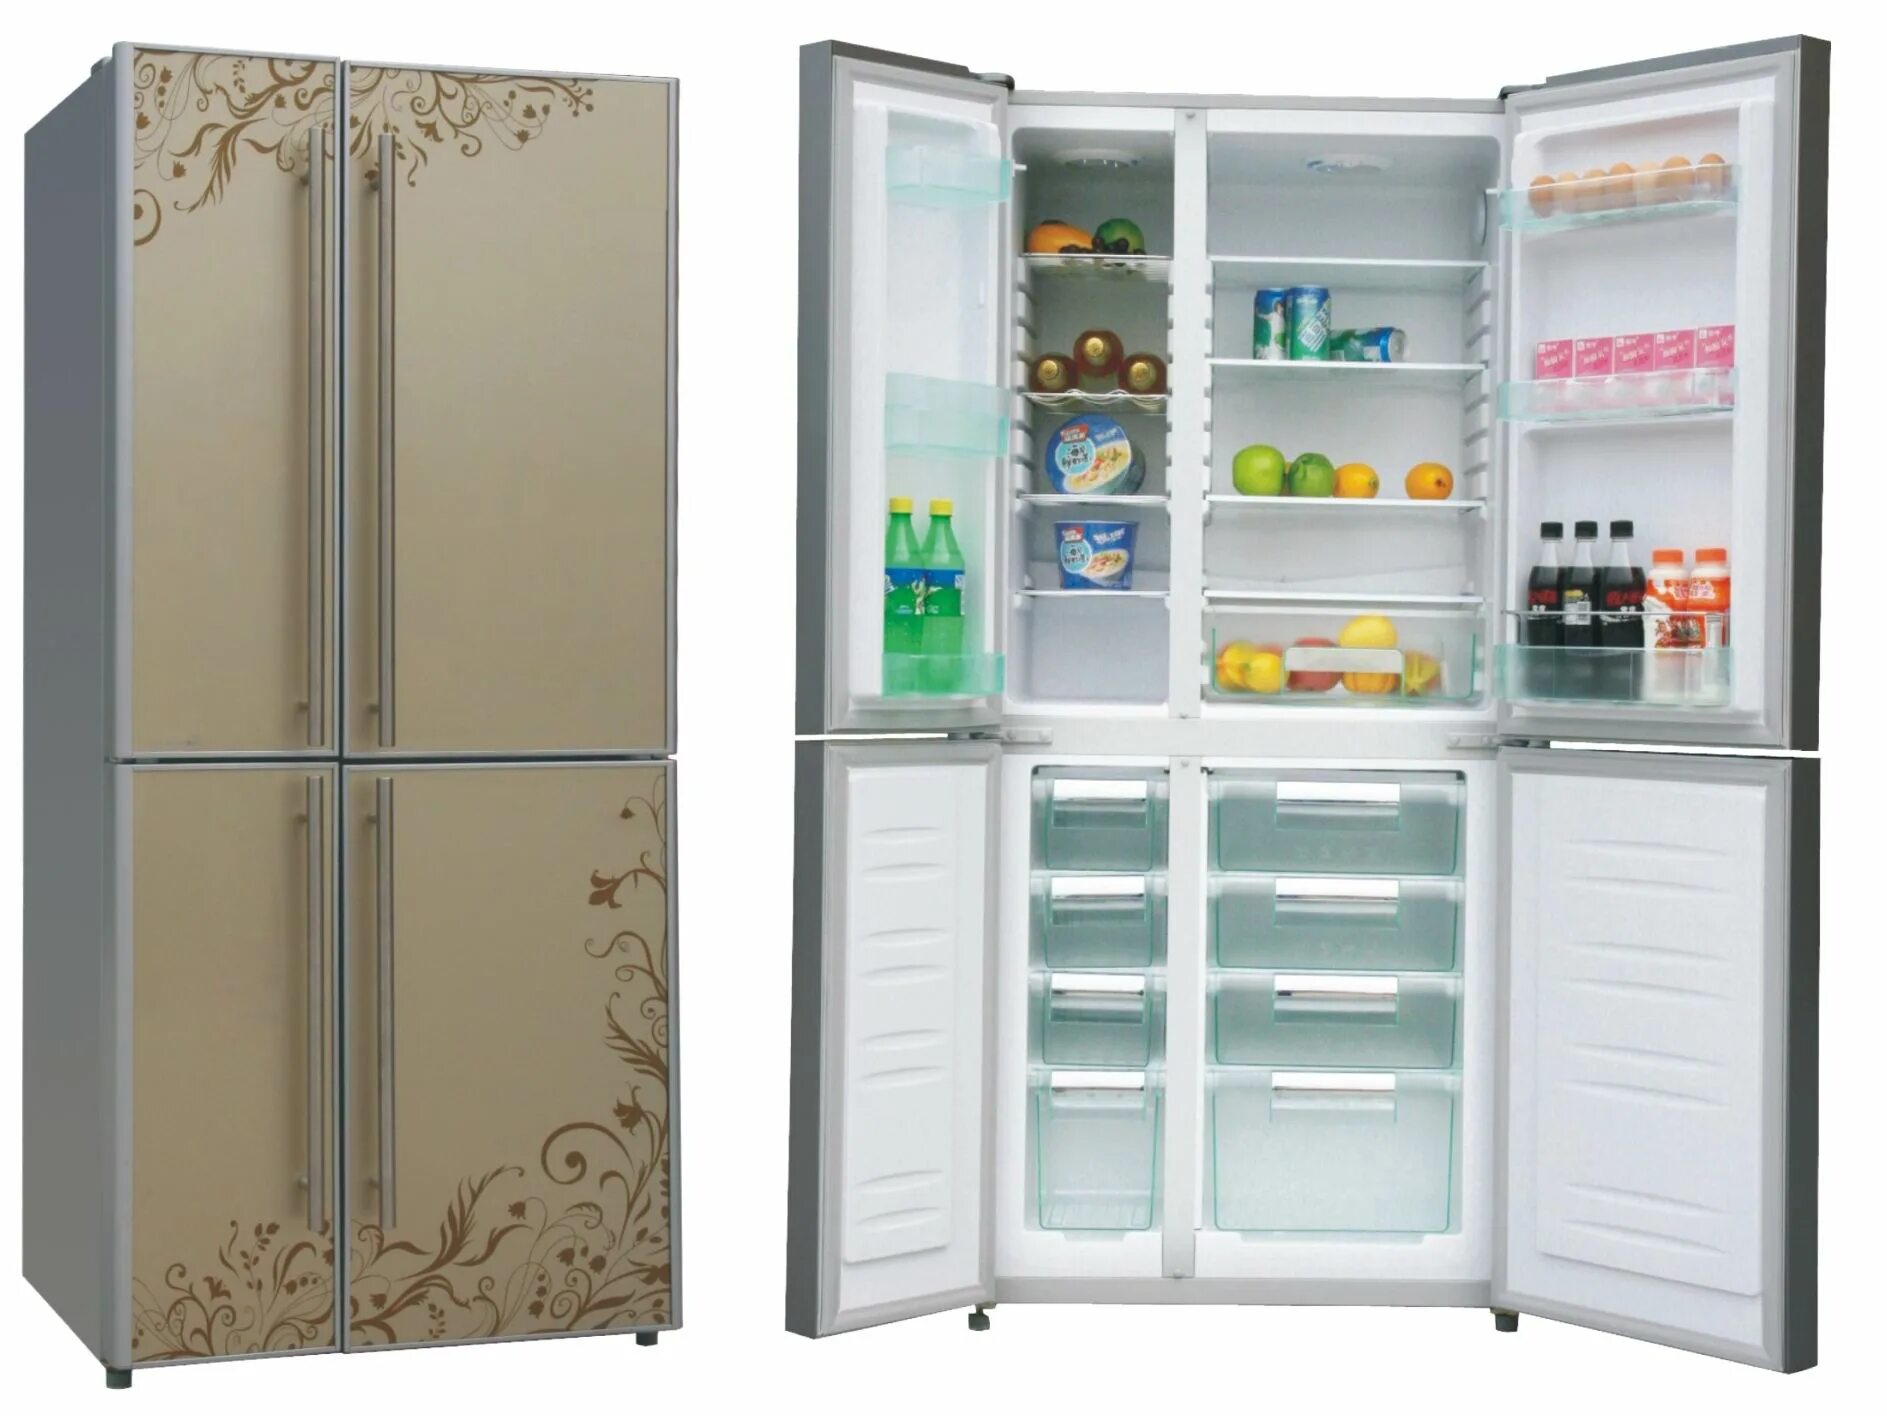 Холодильник (Side-by-Side) Ascoli acdb520wib. Холодильник (Side-by-Side) LG GC-q247cbdc. Холодильник Side by Side с большой морозилкой. Холодильник (Side-by-Side) Thomson ssc30ei32. Холодильник черкесск